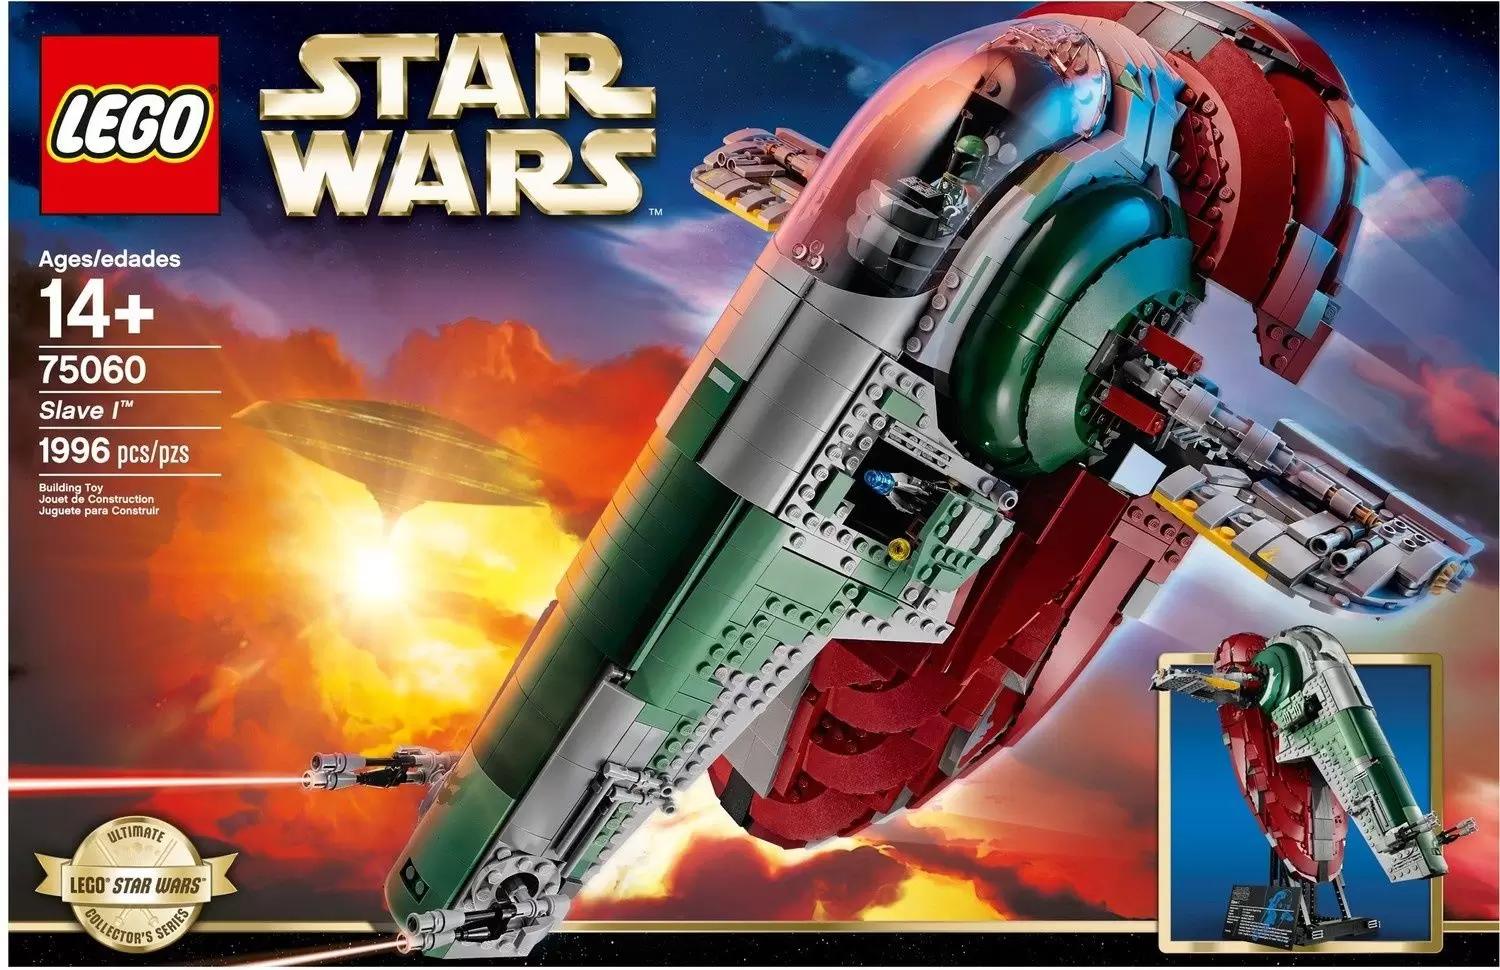 Slave I LEGO Star Wars set